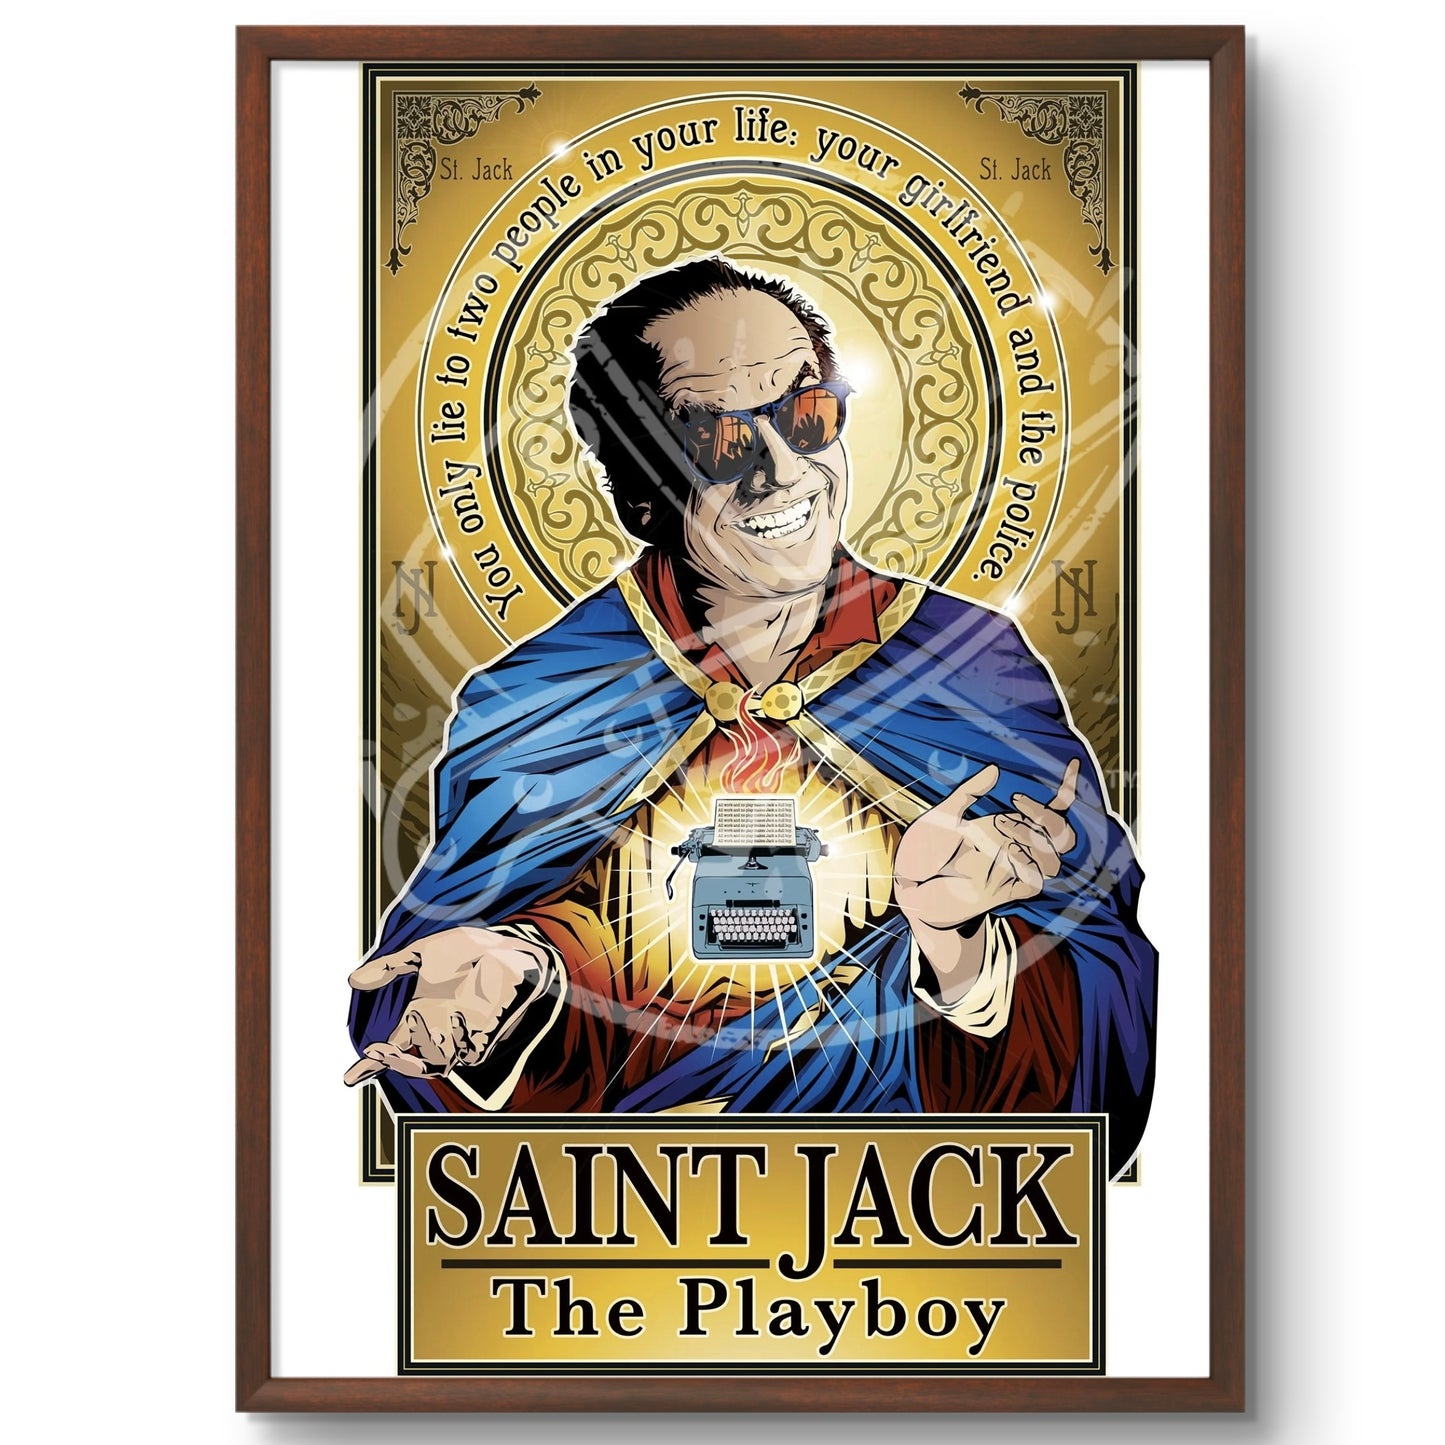 Saint Jack The Playboy Poster Cleaverandblade.com